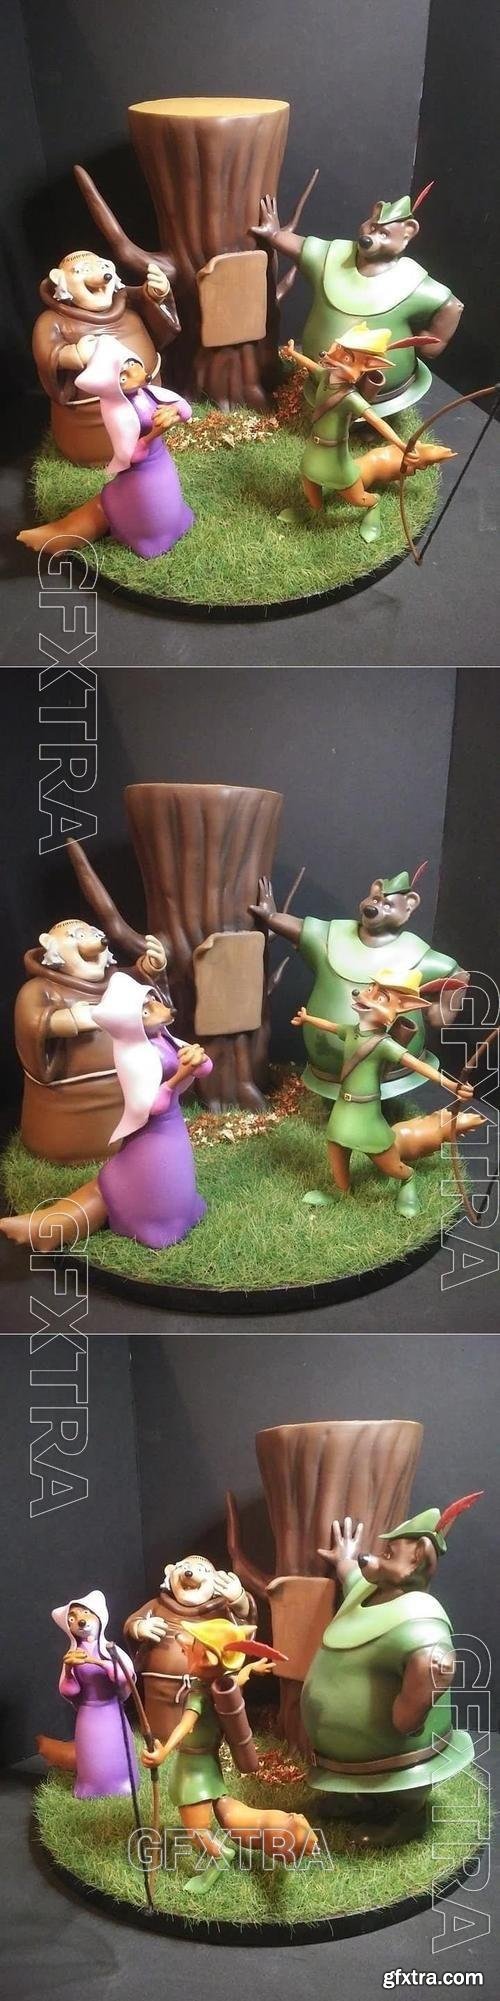 Robin Hood Diorama from Disney 3D